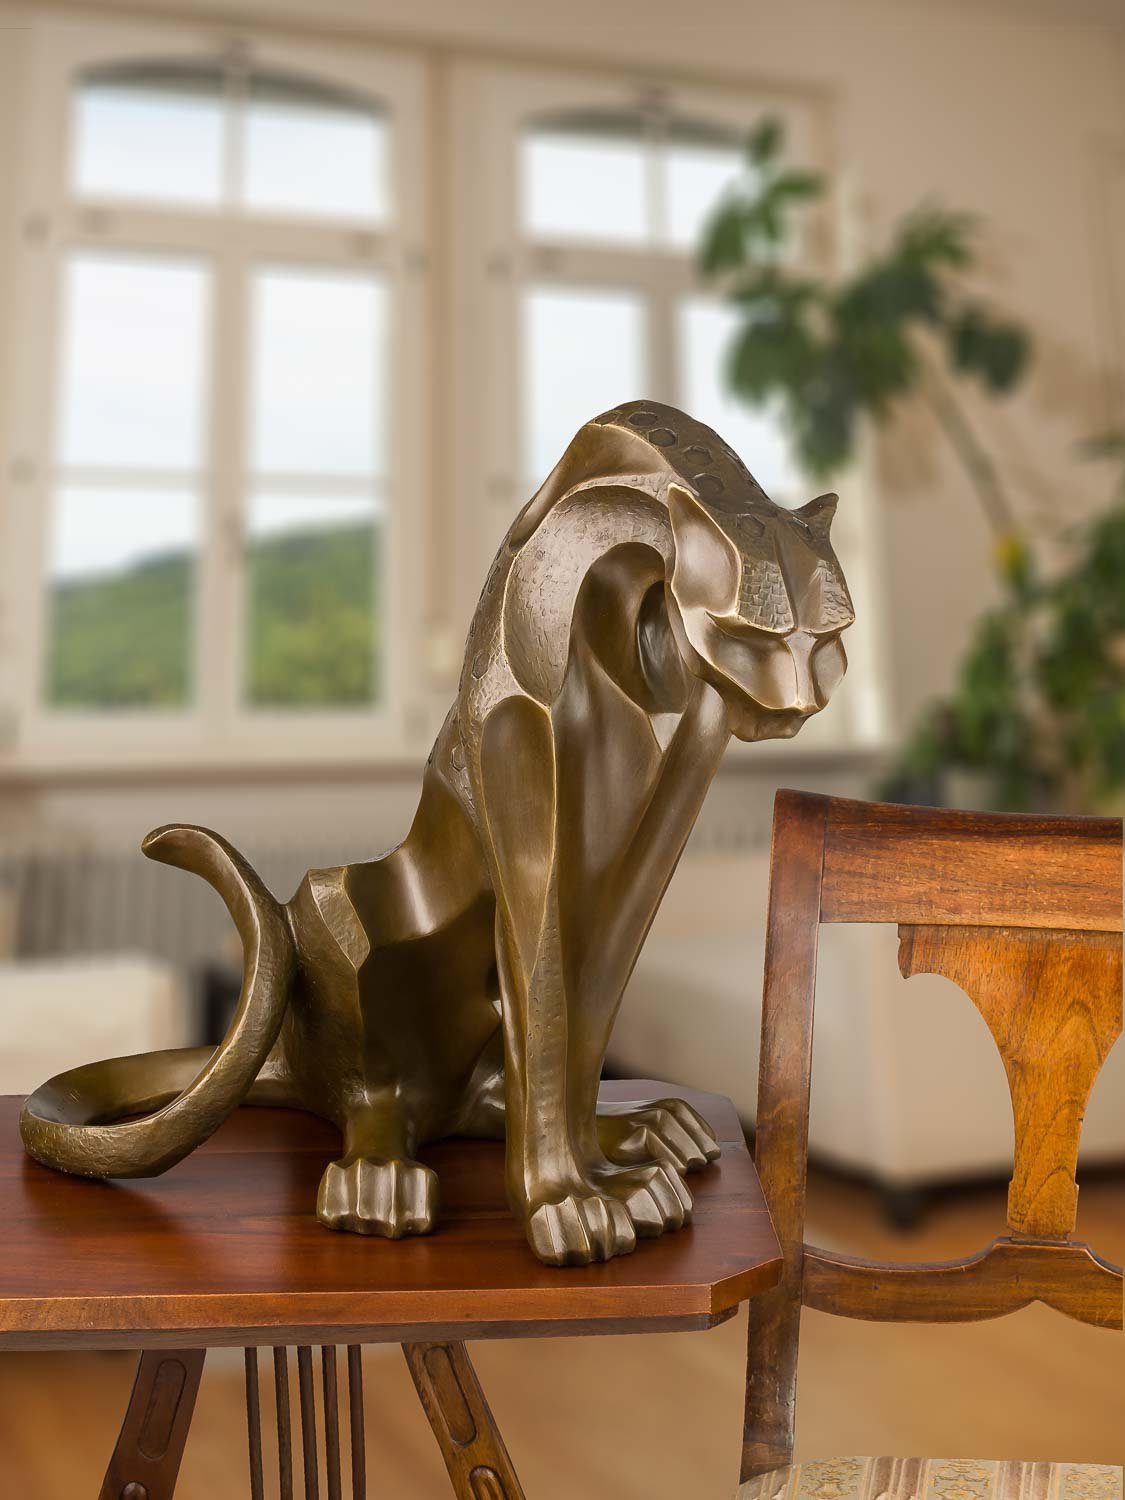 Aubaho Skulptur Bronzefigur Skulptur Bronzeskulptur Panther Jaguar Figur Antik- Bronze